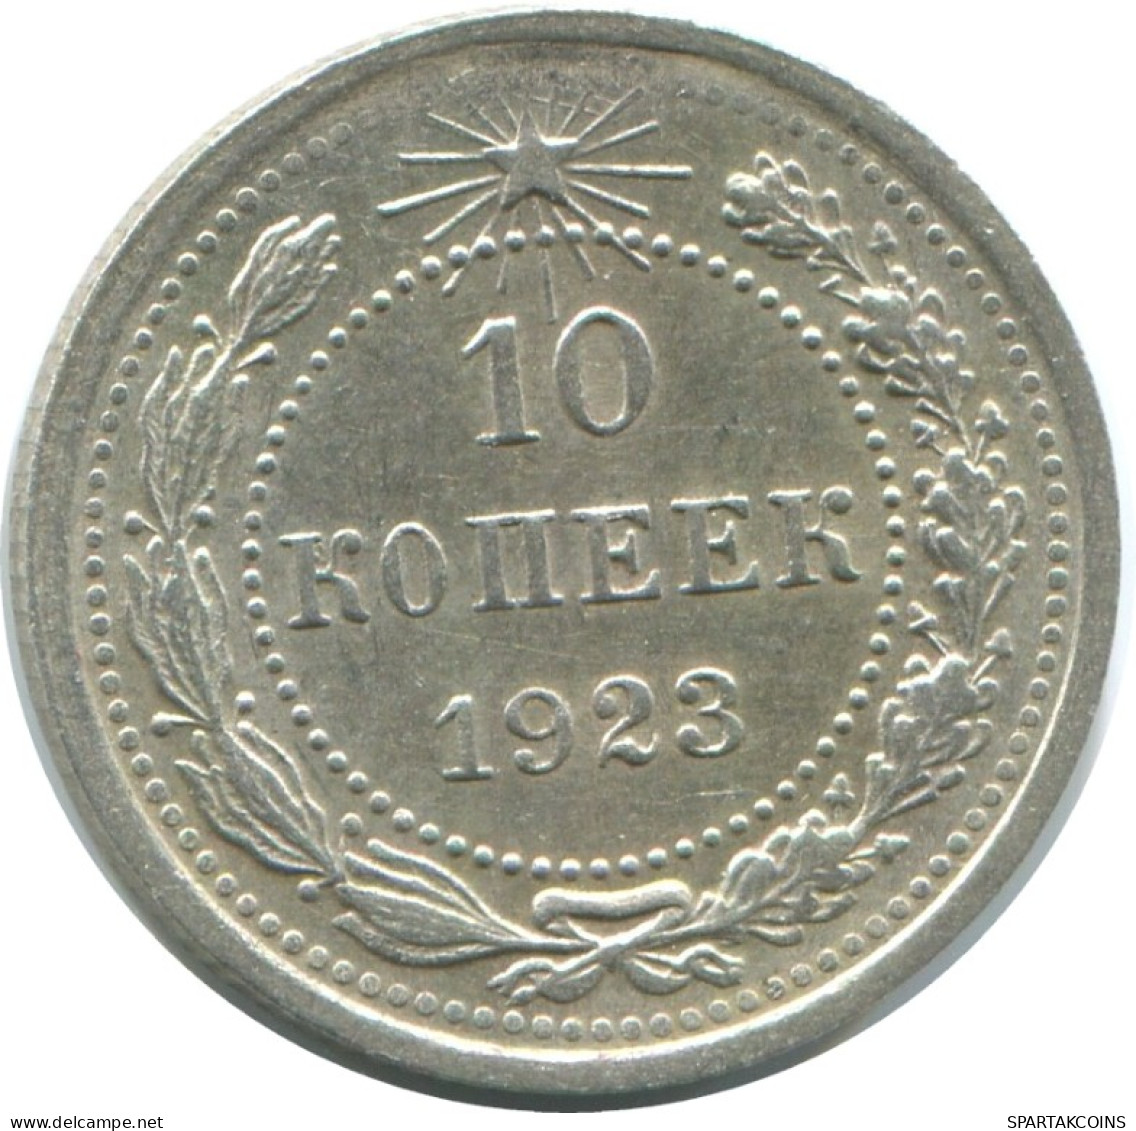 10 KOPEKS 1923 RUSSIA RSFSR SILVER Coin HIGH GRADE #AE922.4.U.A - Russia